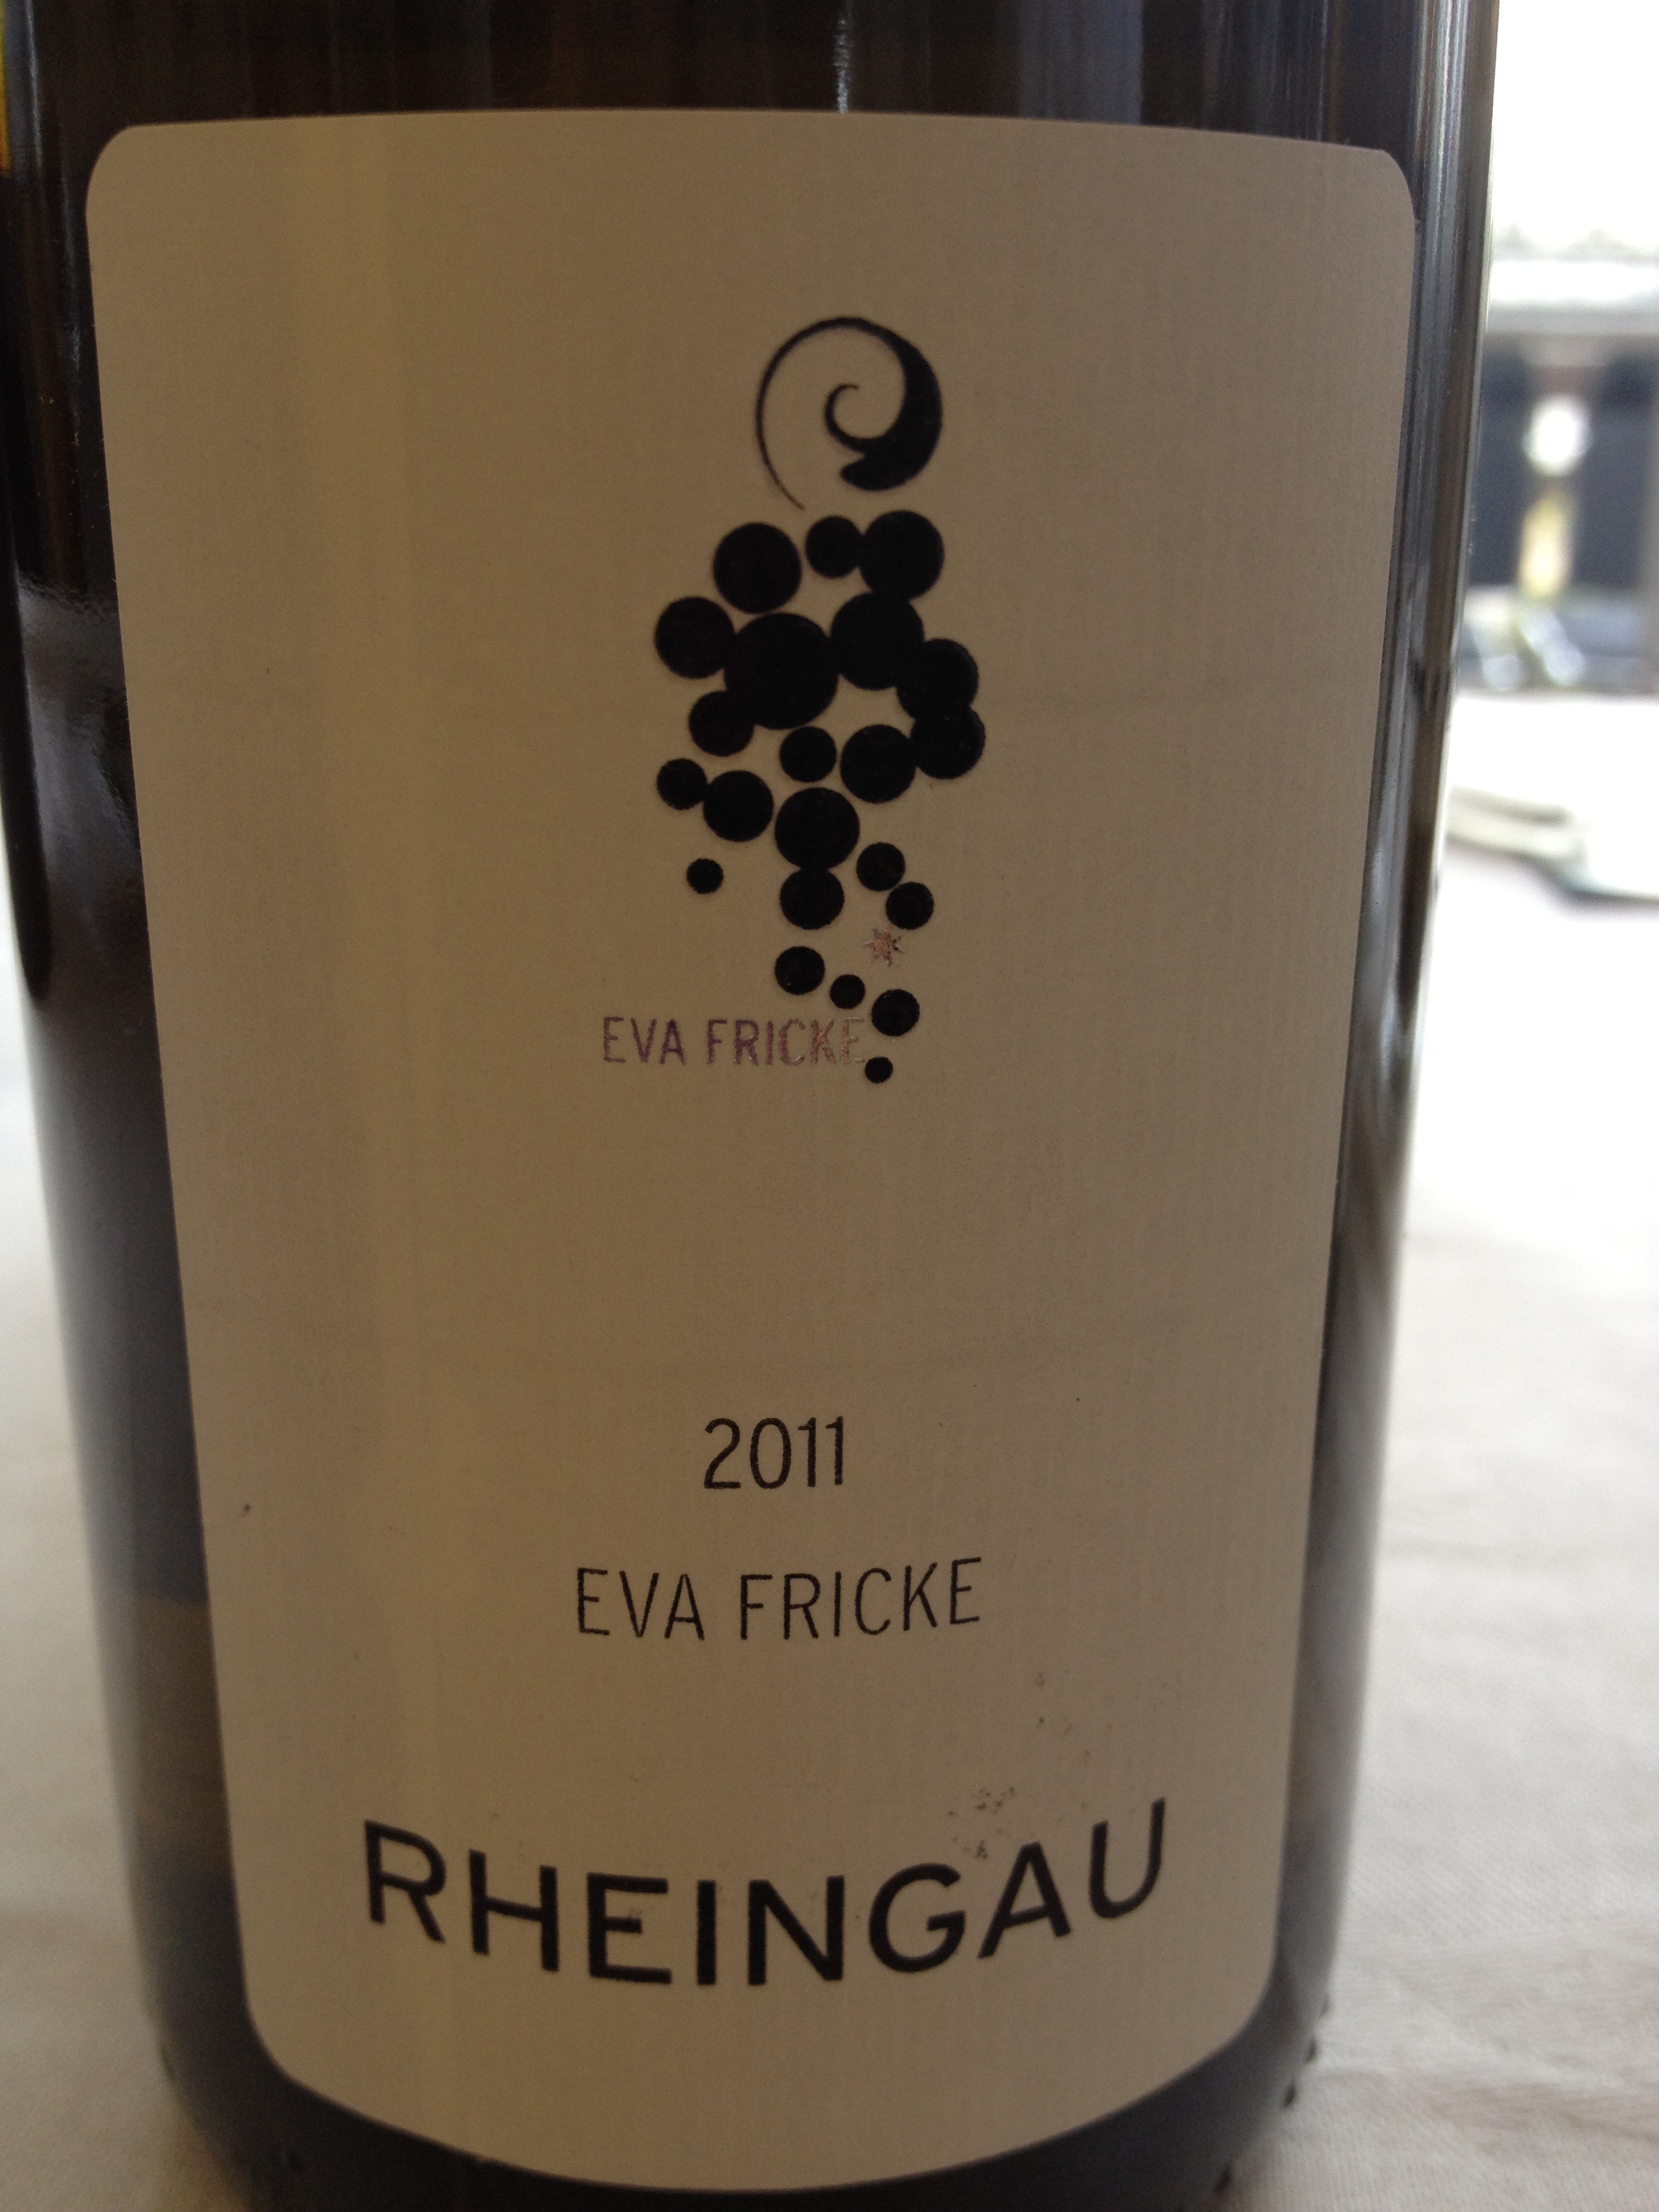 Rheingau Riesling from Eva Fricke